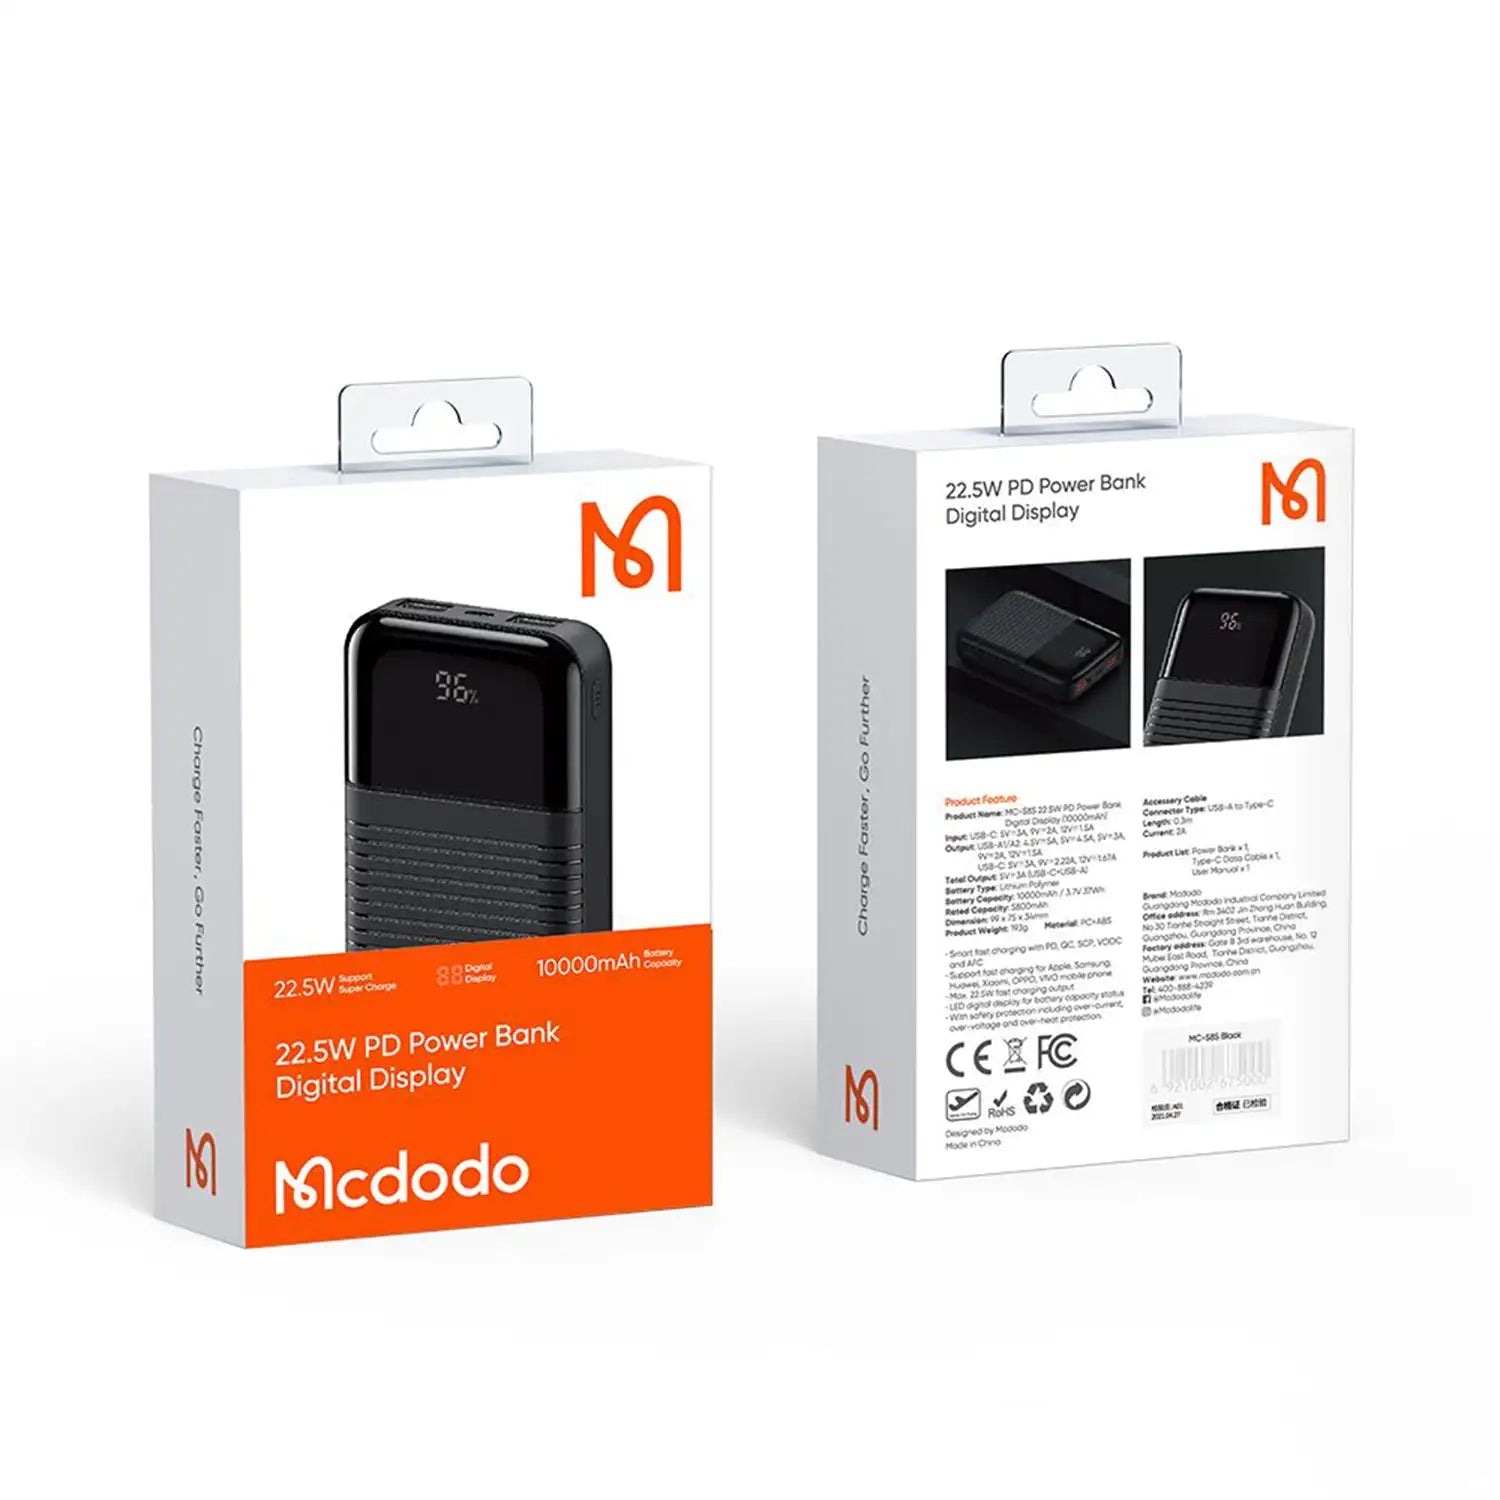 Mcdodo Moon Series 22.5W Digital Display Power Bank 10000mAh, Black